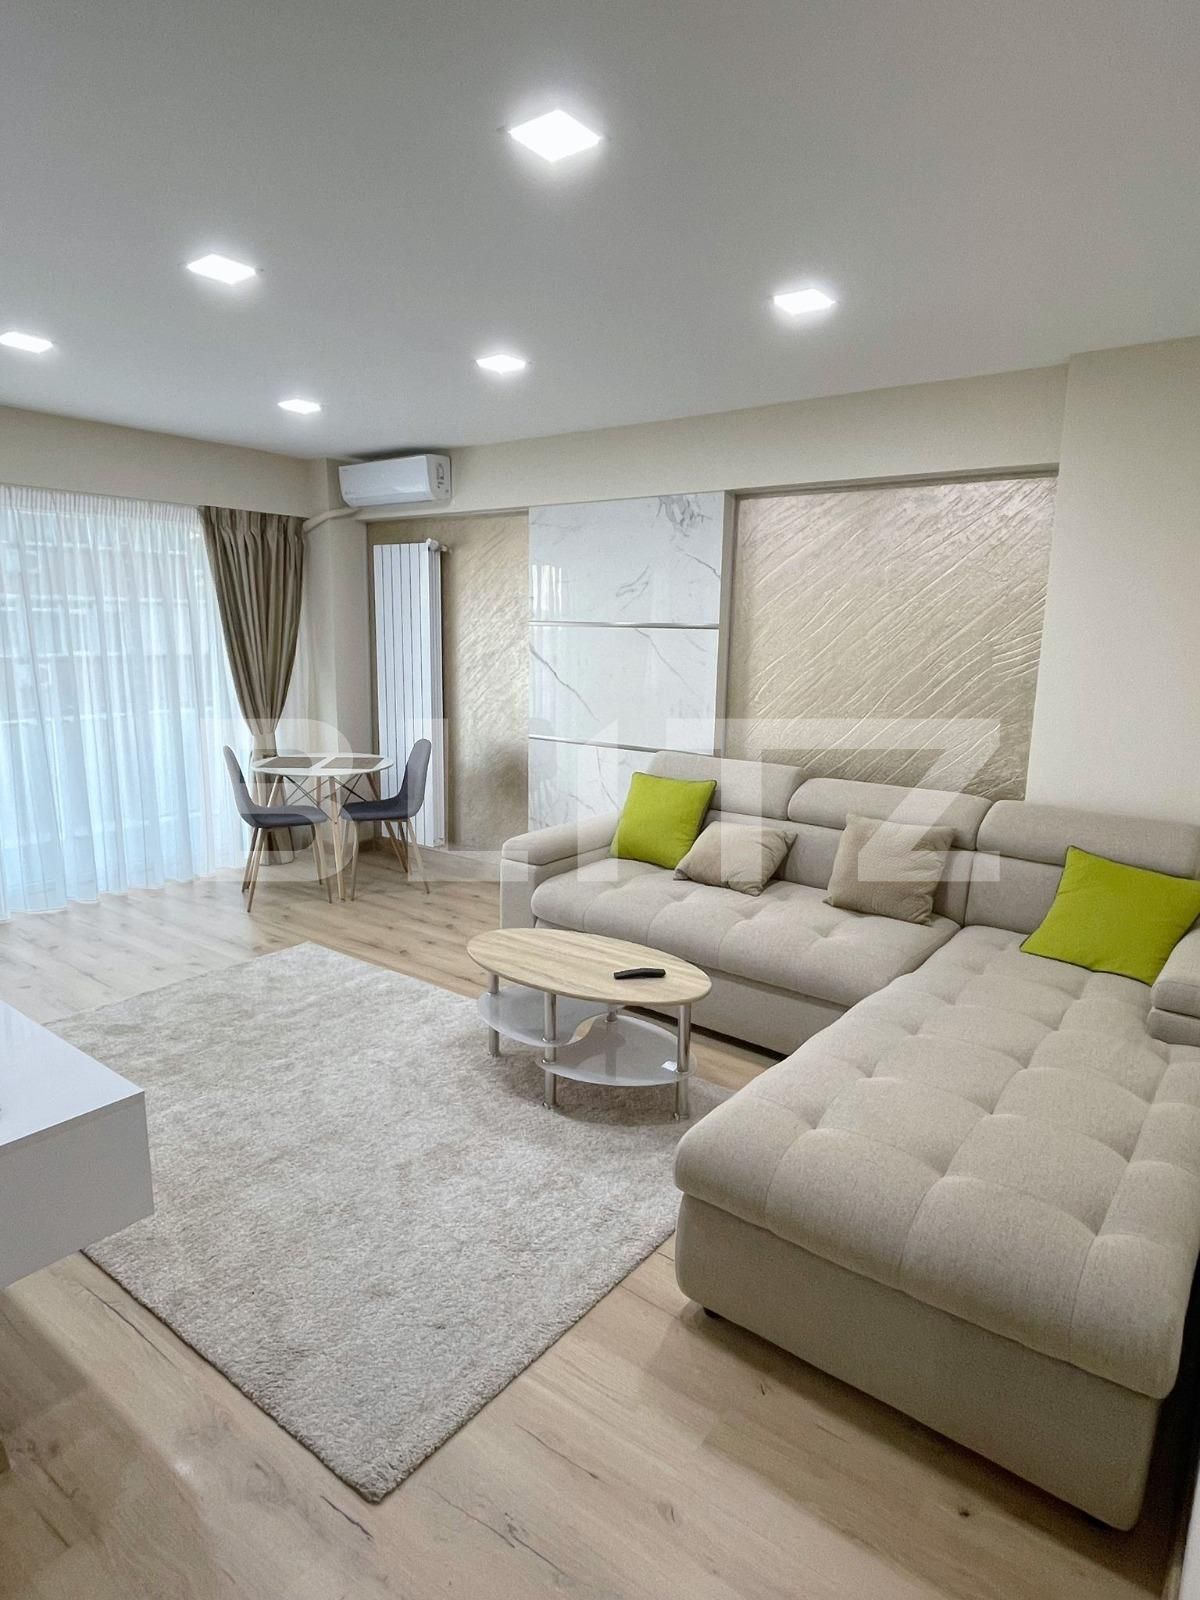 Apartament 3 camere lux, 73 mp, mobilier nou, in Nufarul!